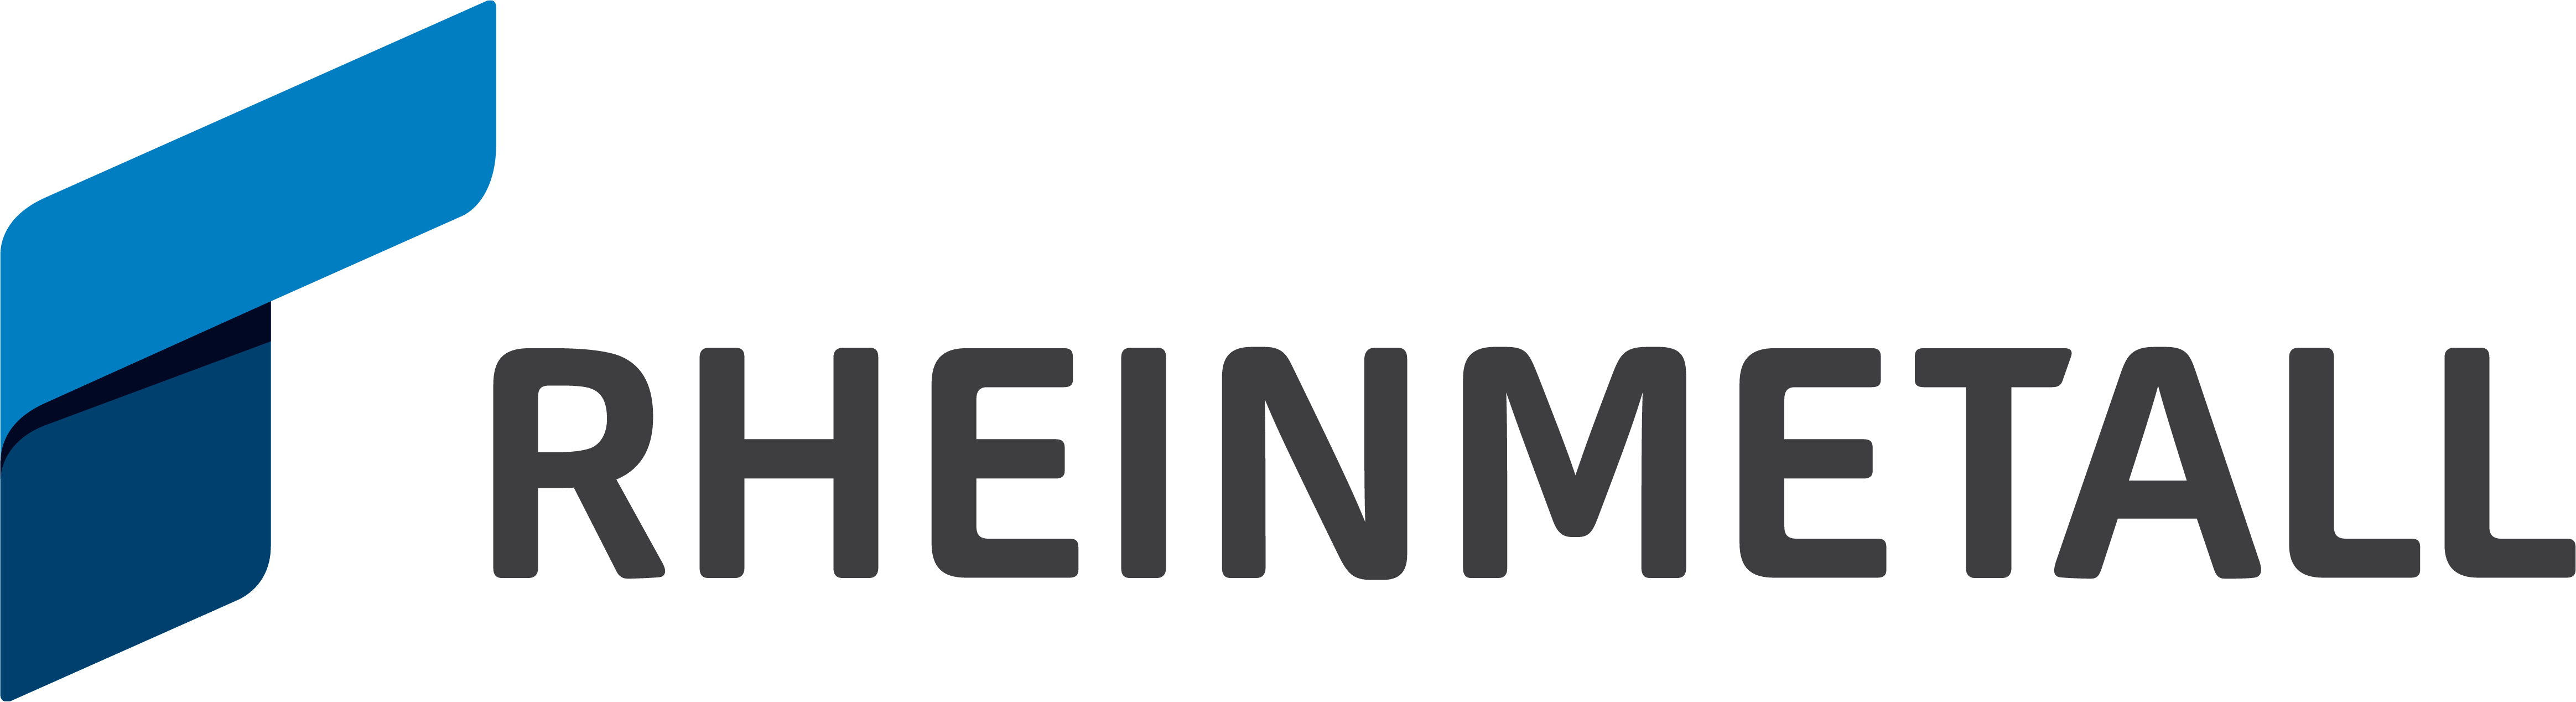 American Rheinmetall's logo